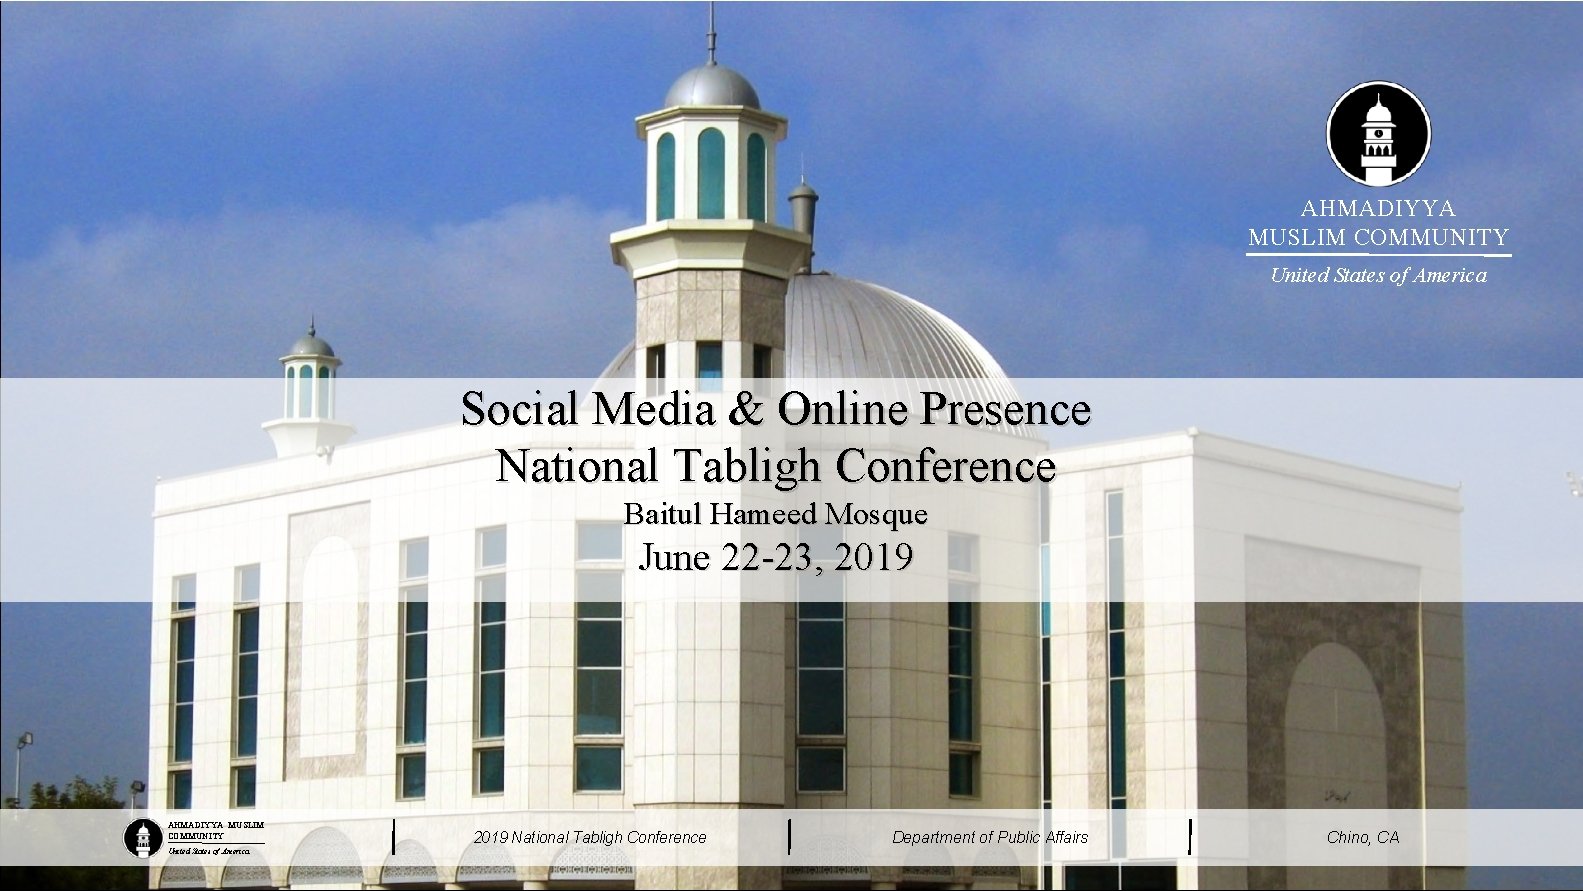 AHMADIYYA MUSLIM COMMUNITY United States of America Social Media & Online Presence National Tabligh